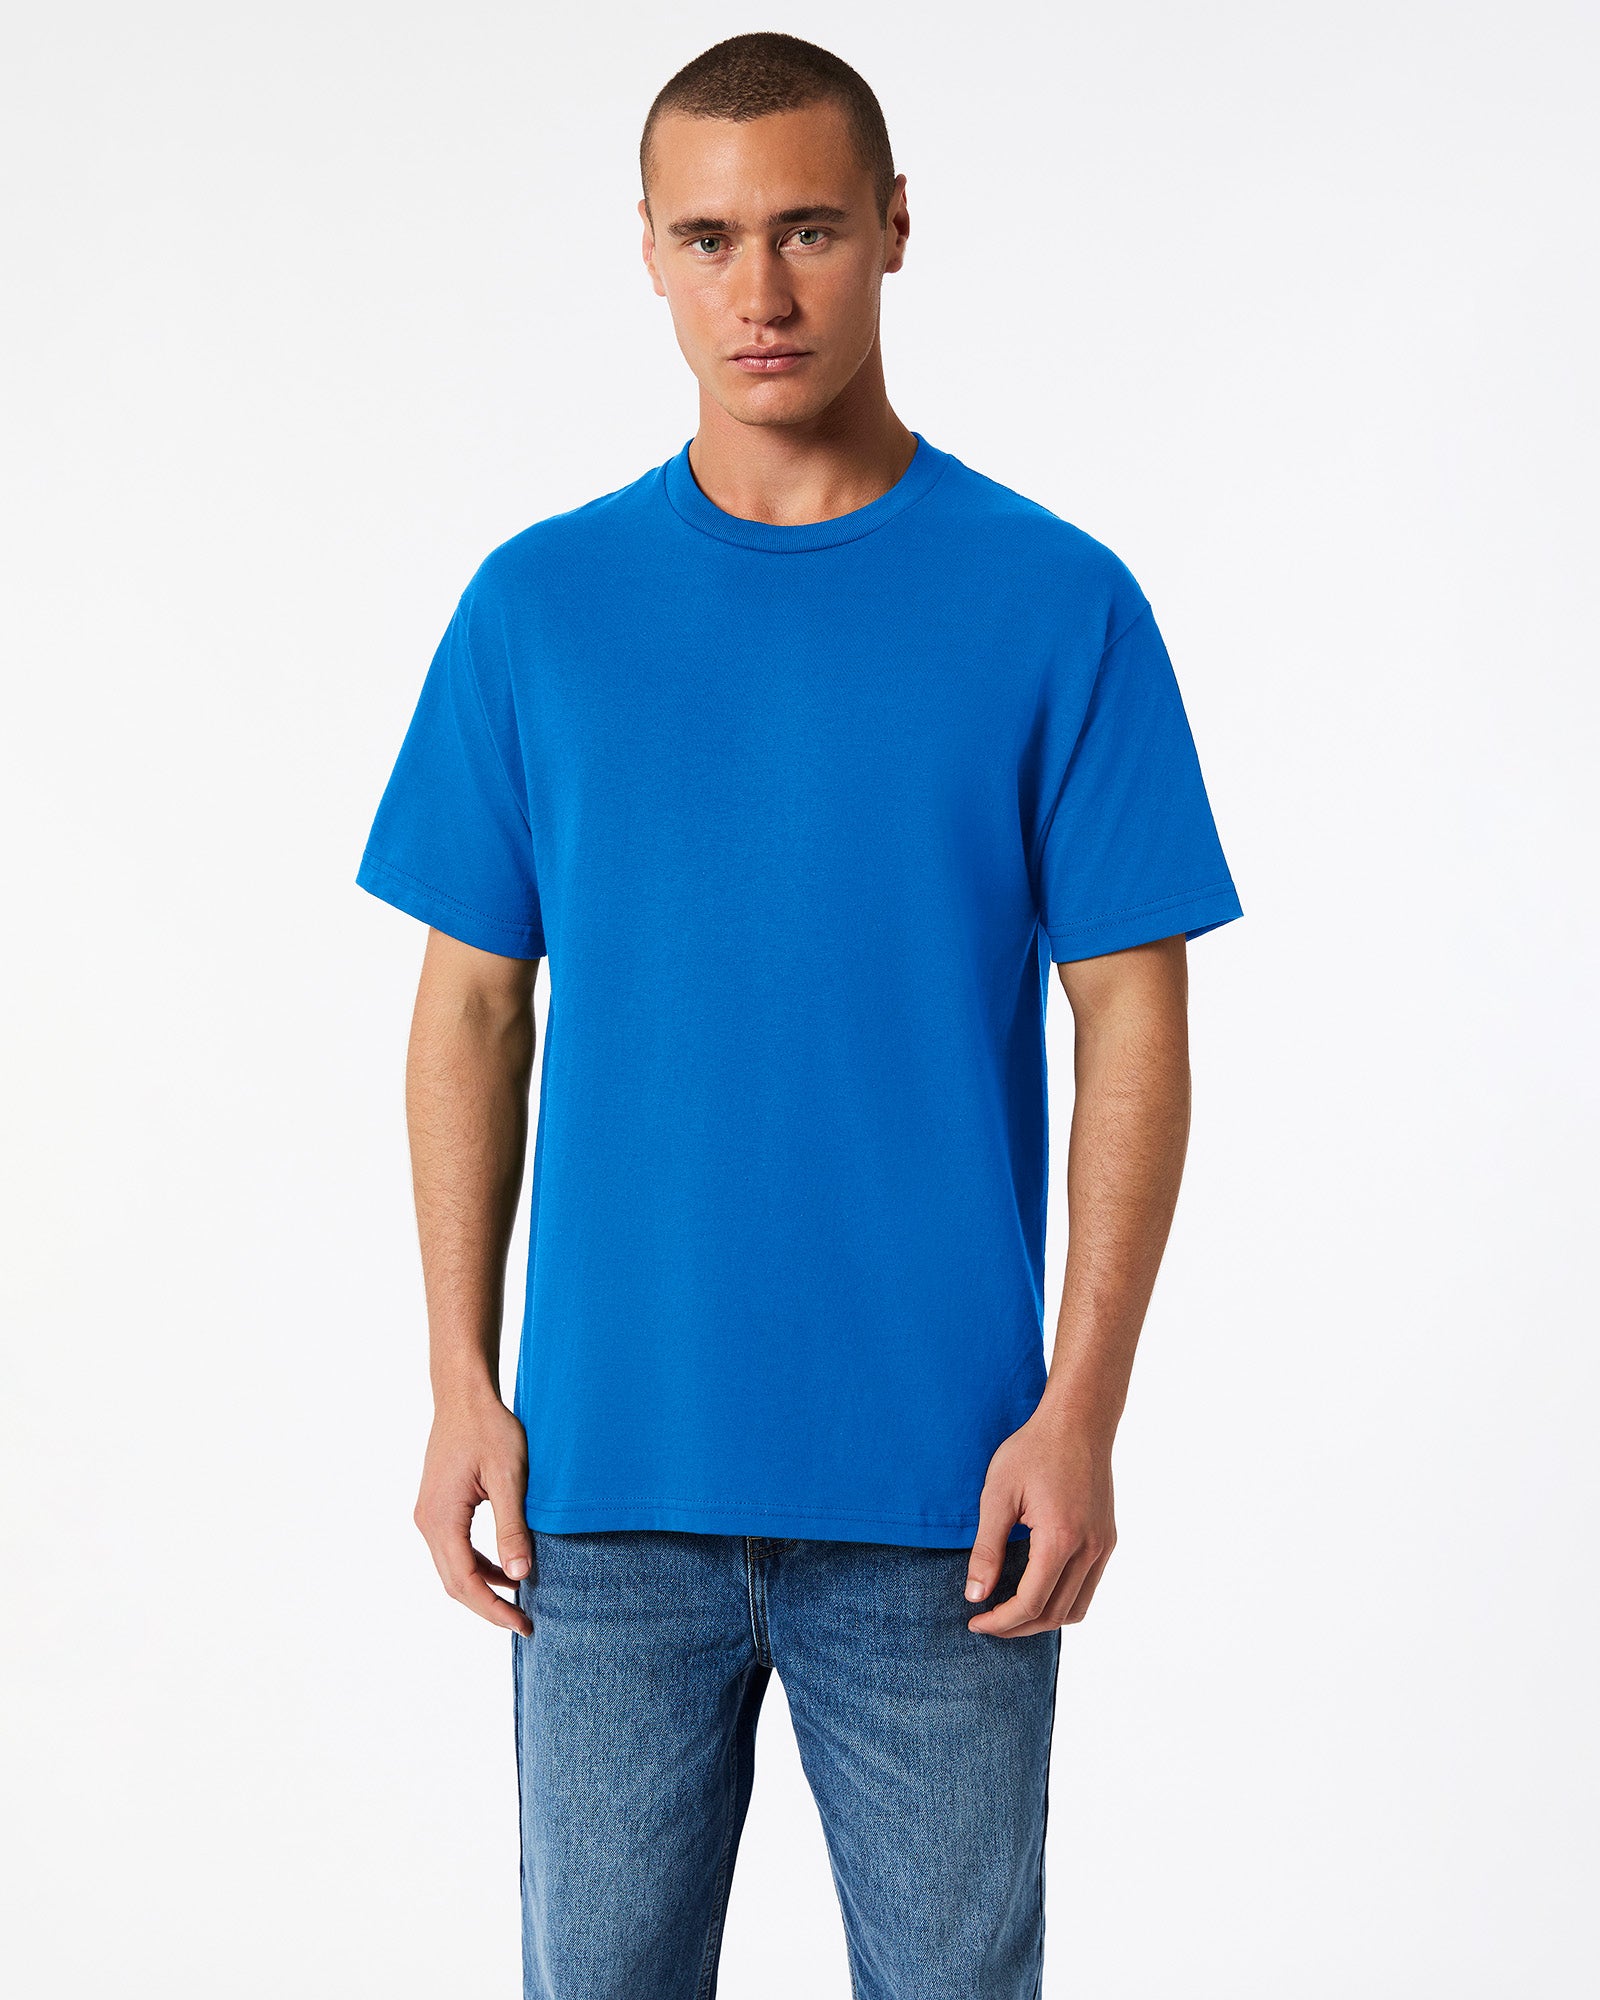 Heavyweight Unisex T-Shirt - Royal